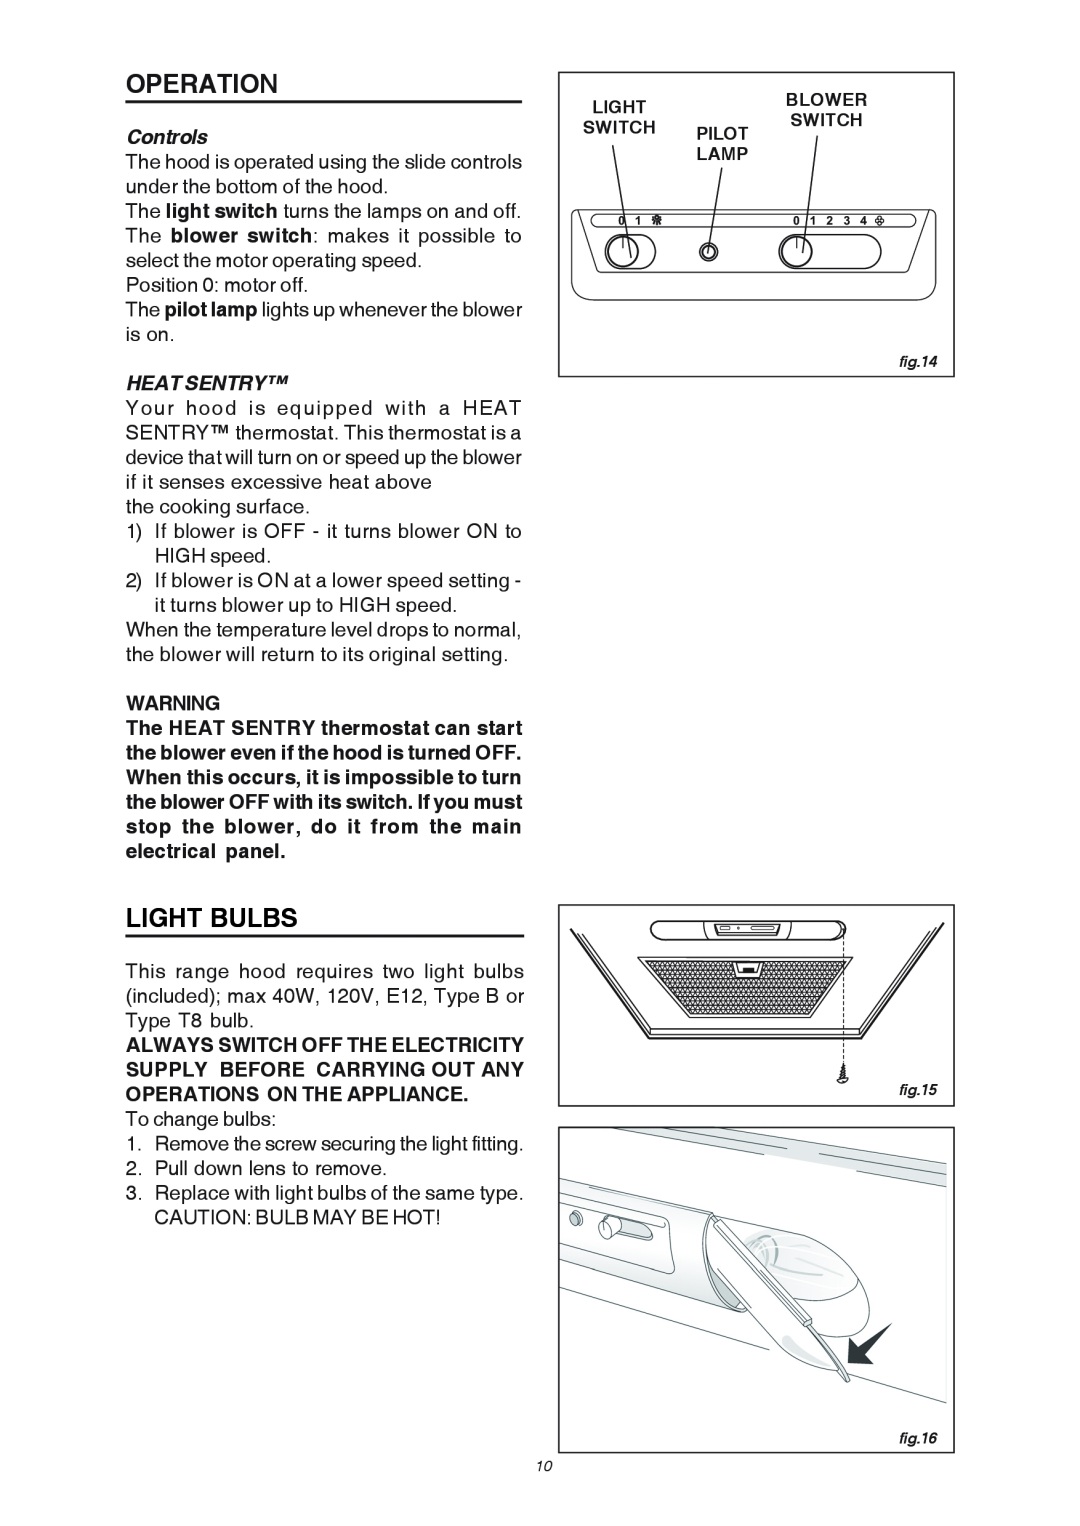 Broan RM503004, RM503604 manual Operation, Light Bulbs, Controls, Heat Sentry 